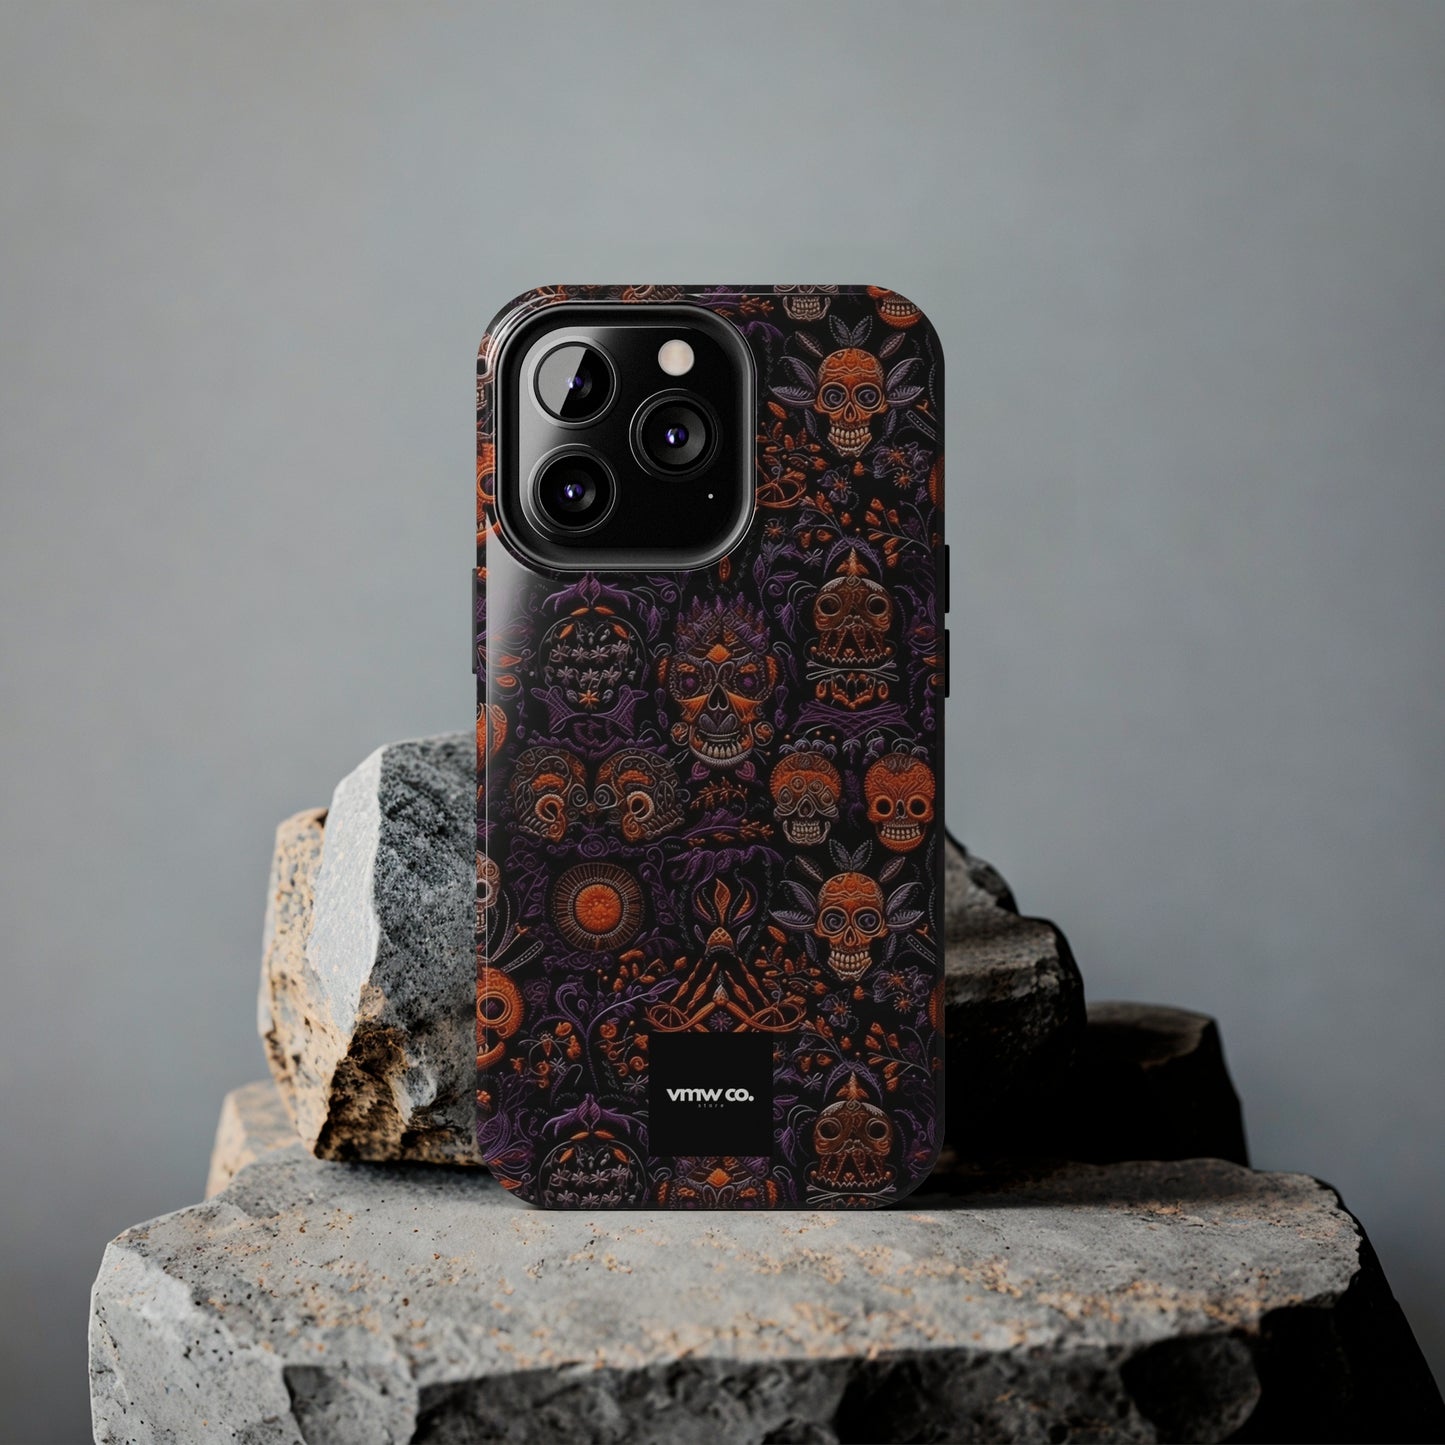 Halloween Orange and Purple Skulls iPhone Tough Phone Cases